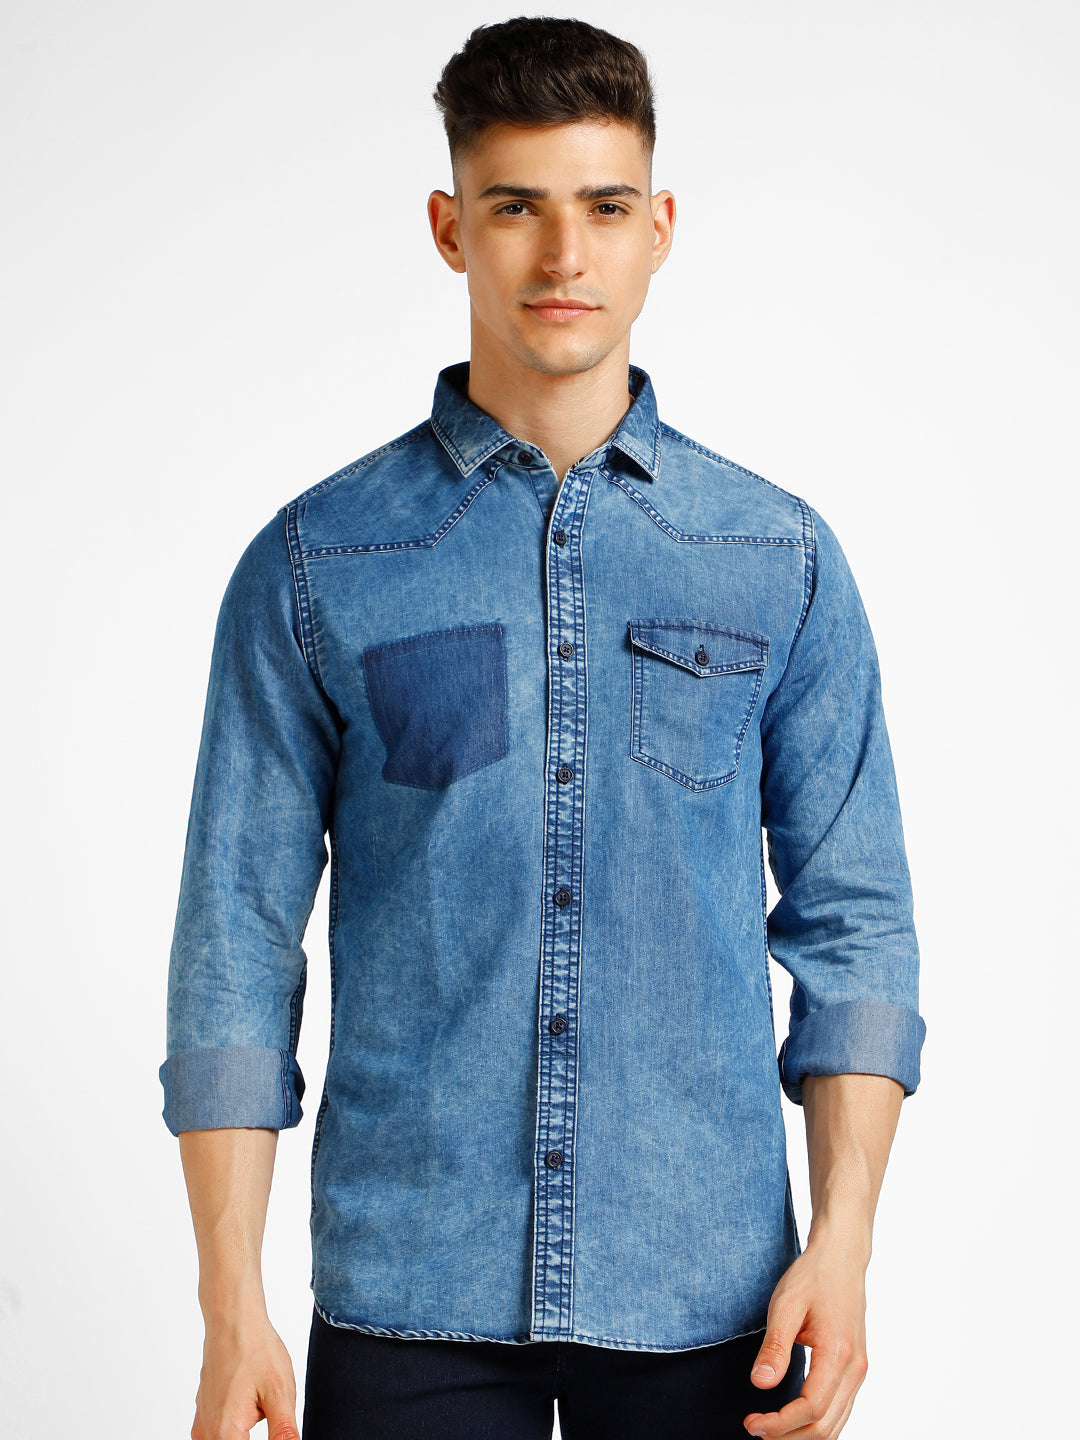 Urbano Fashion Men's Blue Denim Full Sleeve Slim Fit Washed Casual Shirt